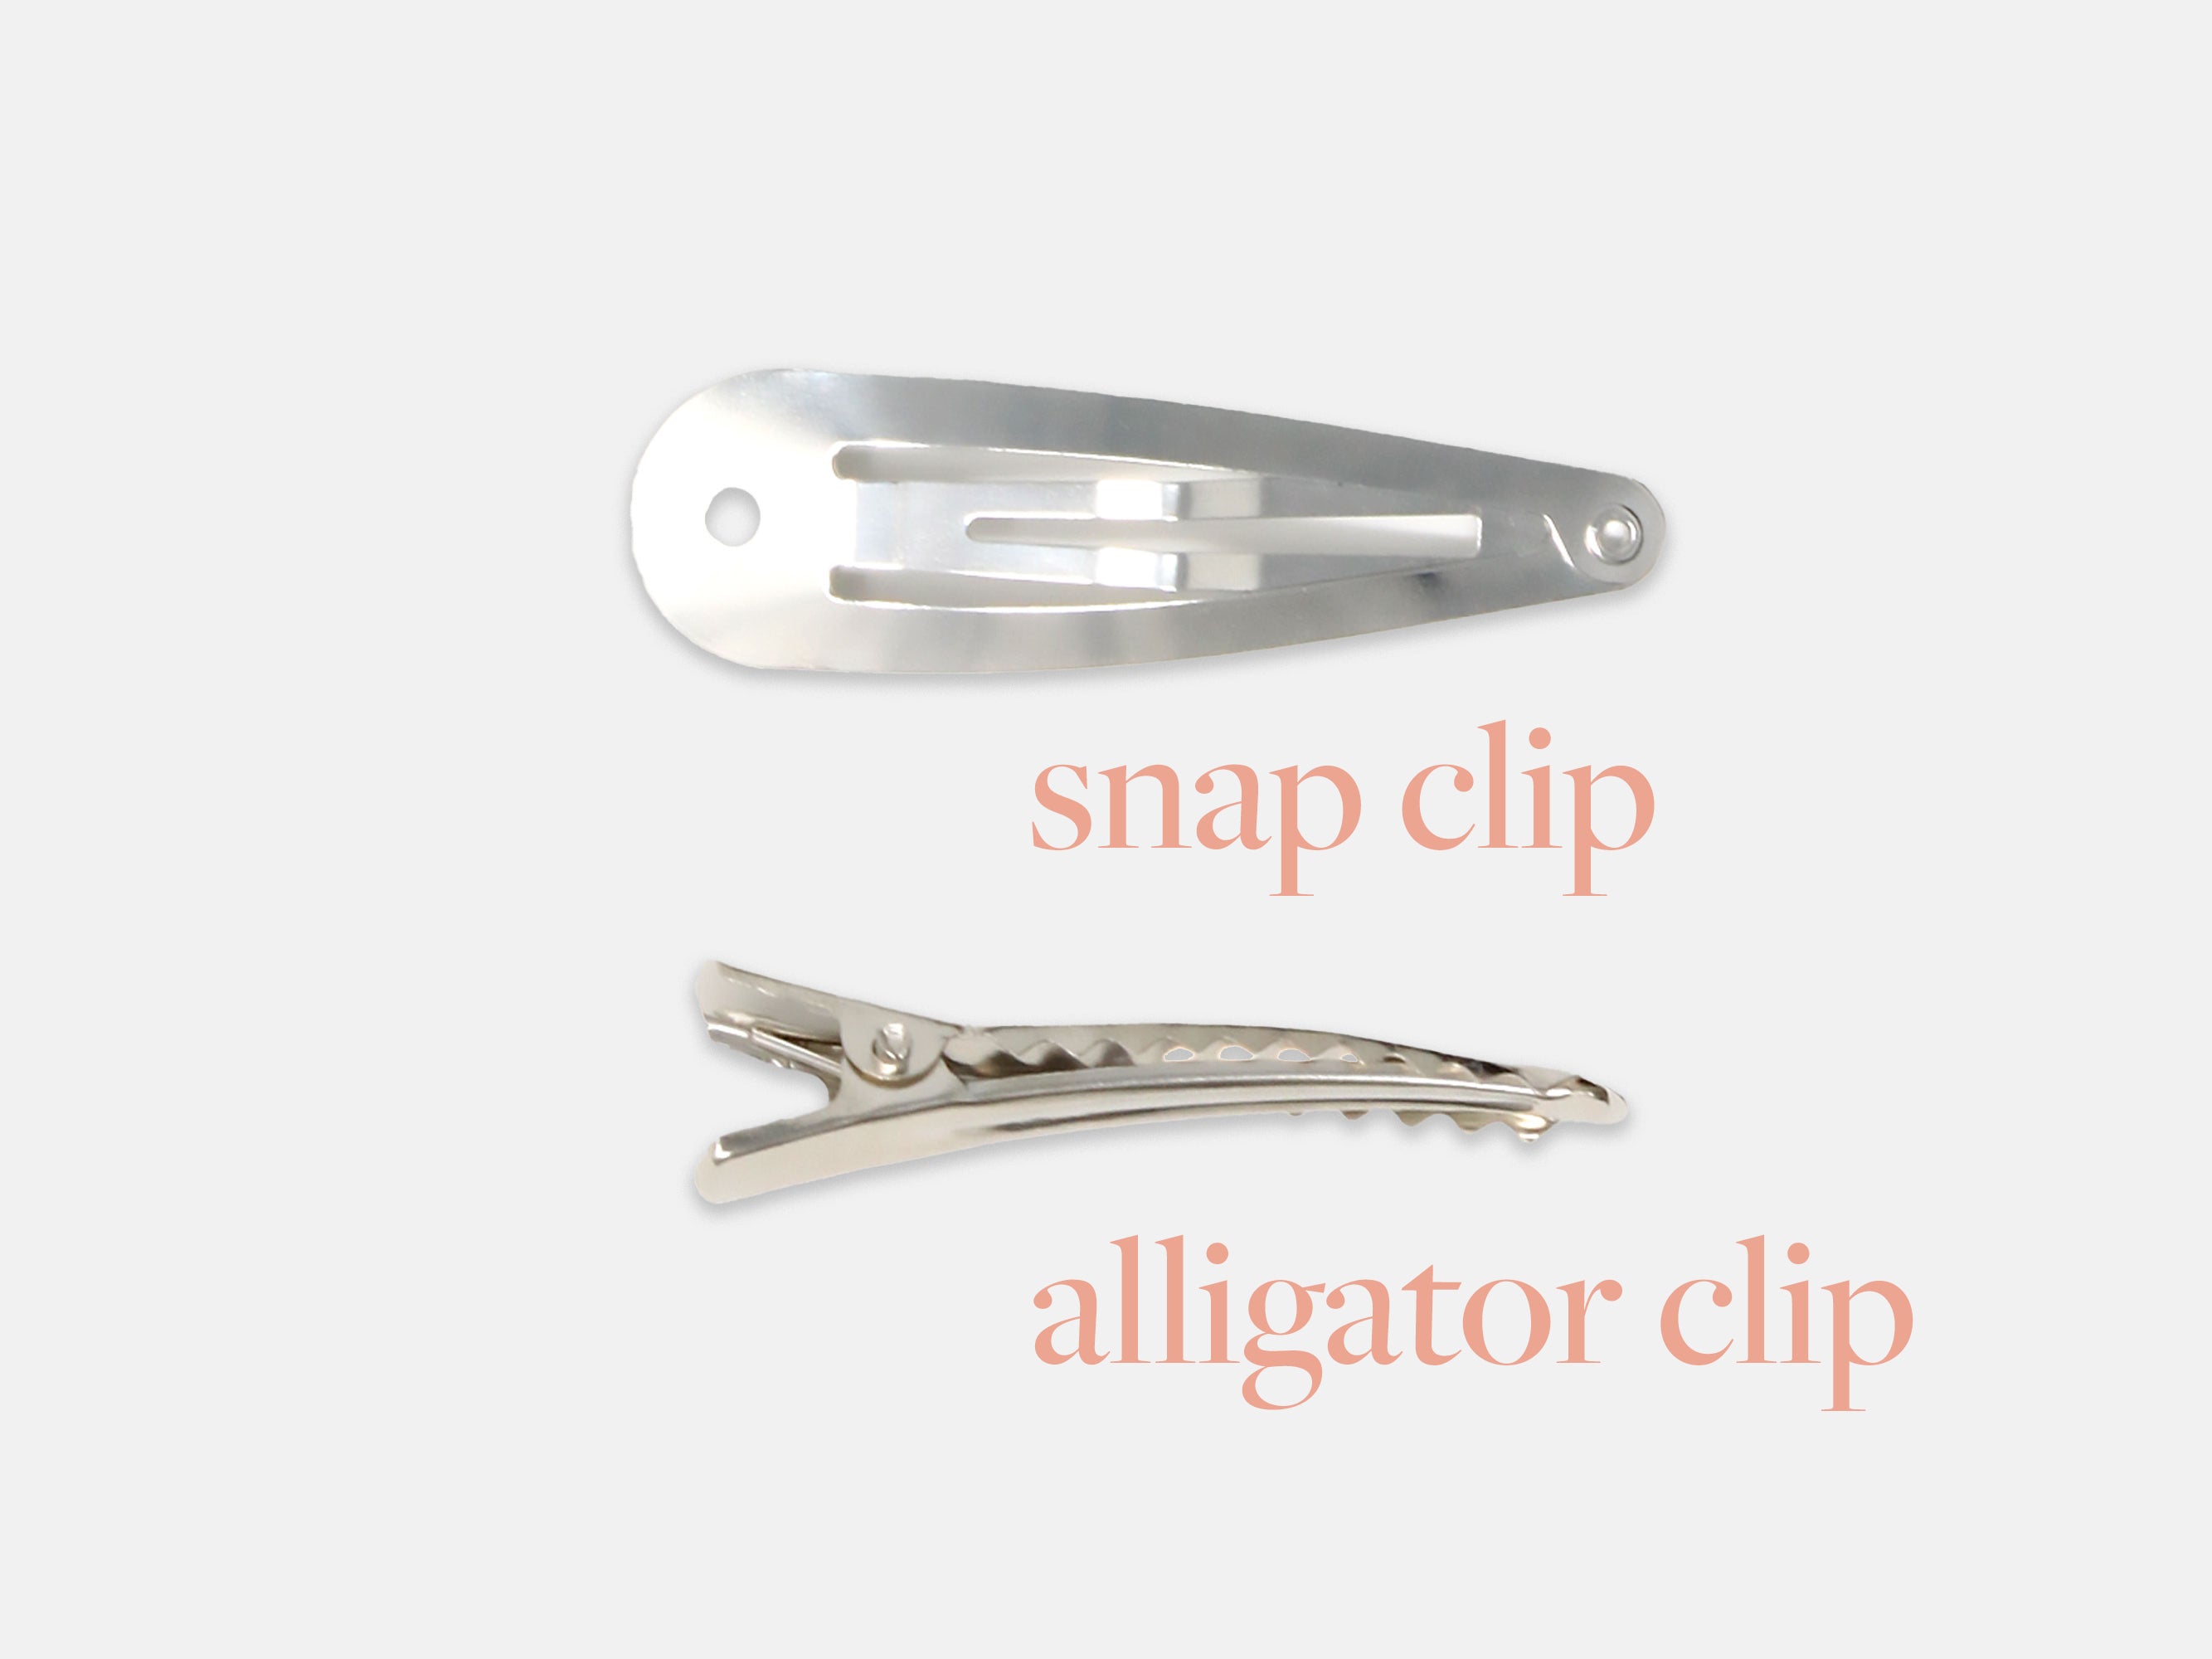 Snap clip and alligator clip comparison | Holme & Moss